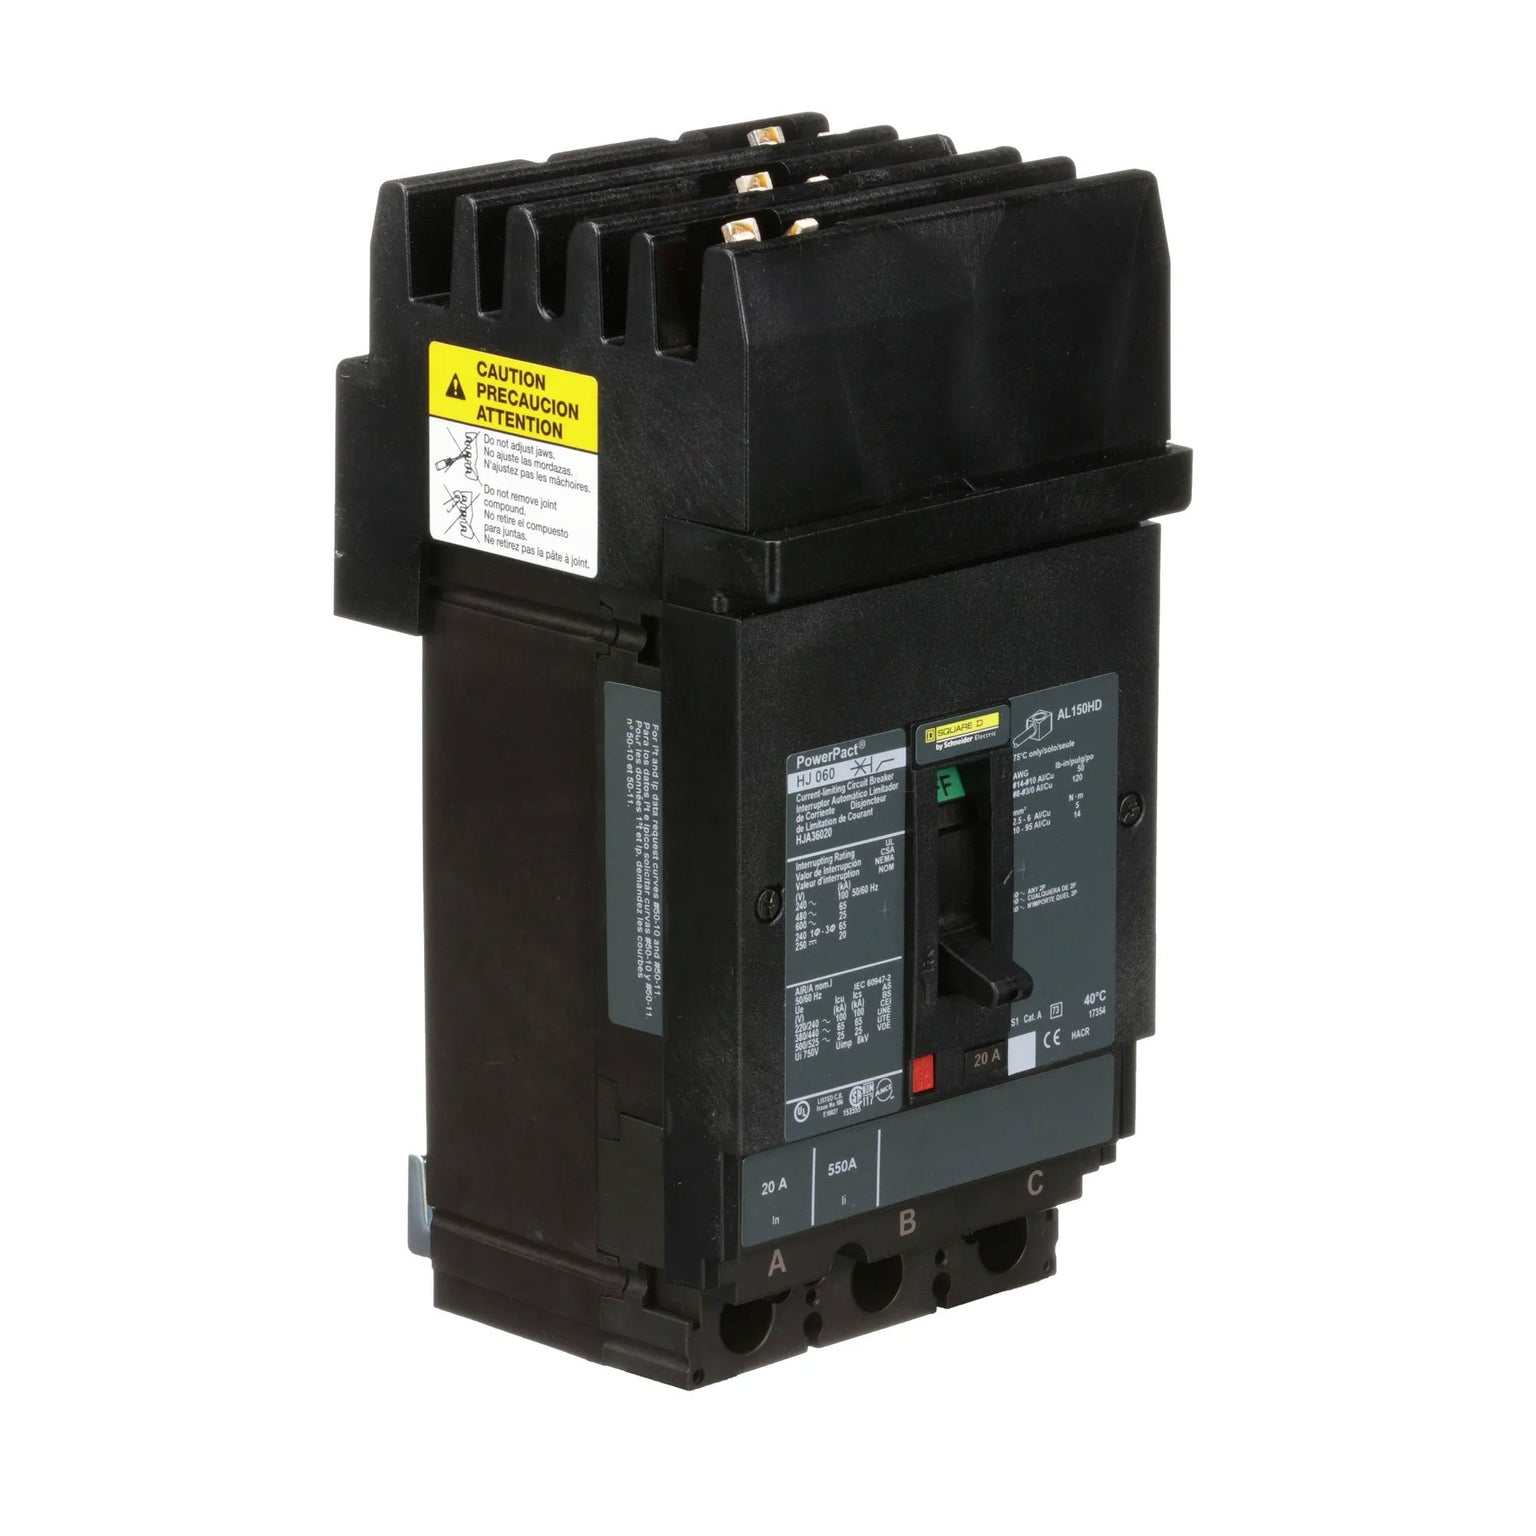 HJA36020 - Square D - Molded Case Circuit Breaker